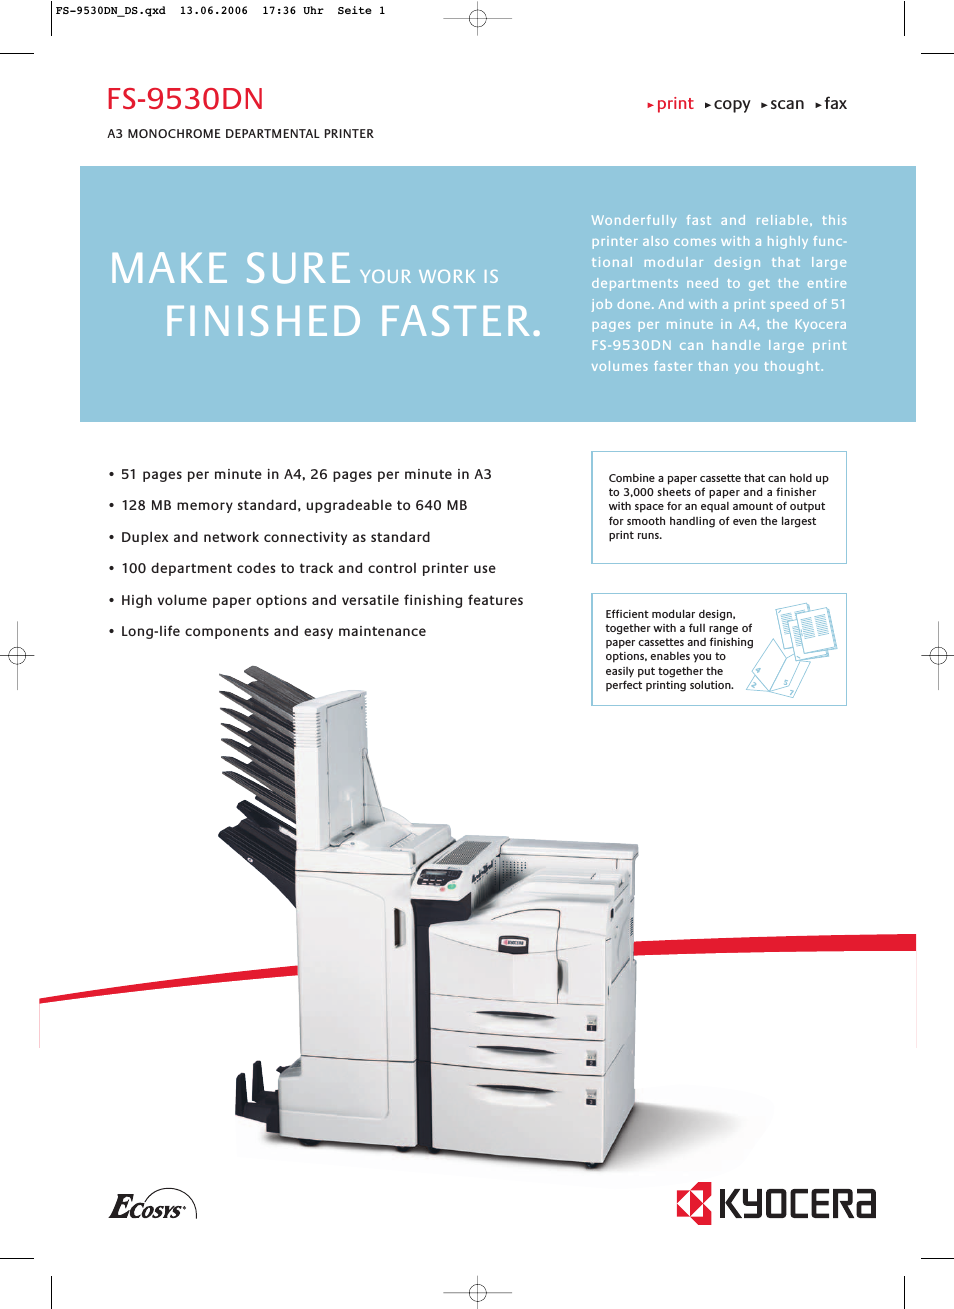 A3 Monochrome Departmental Printer FS-9530DN